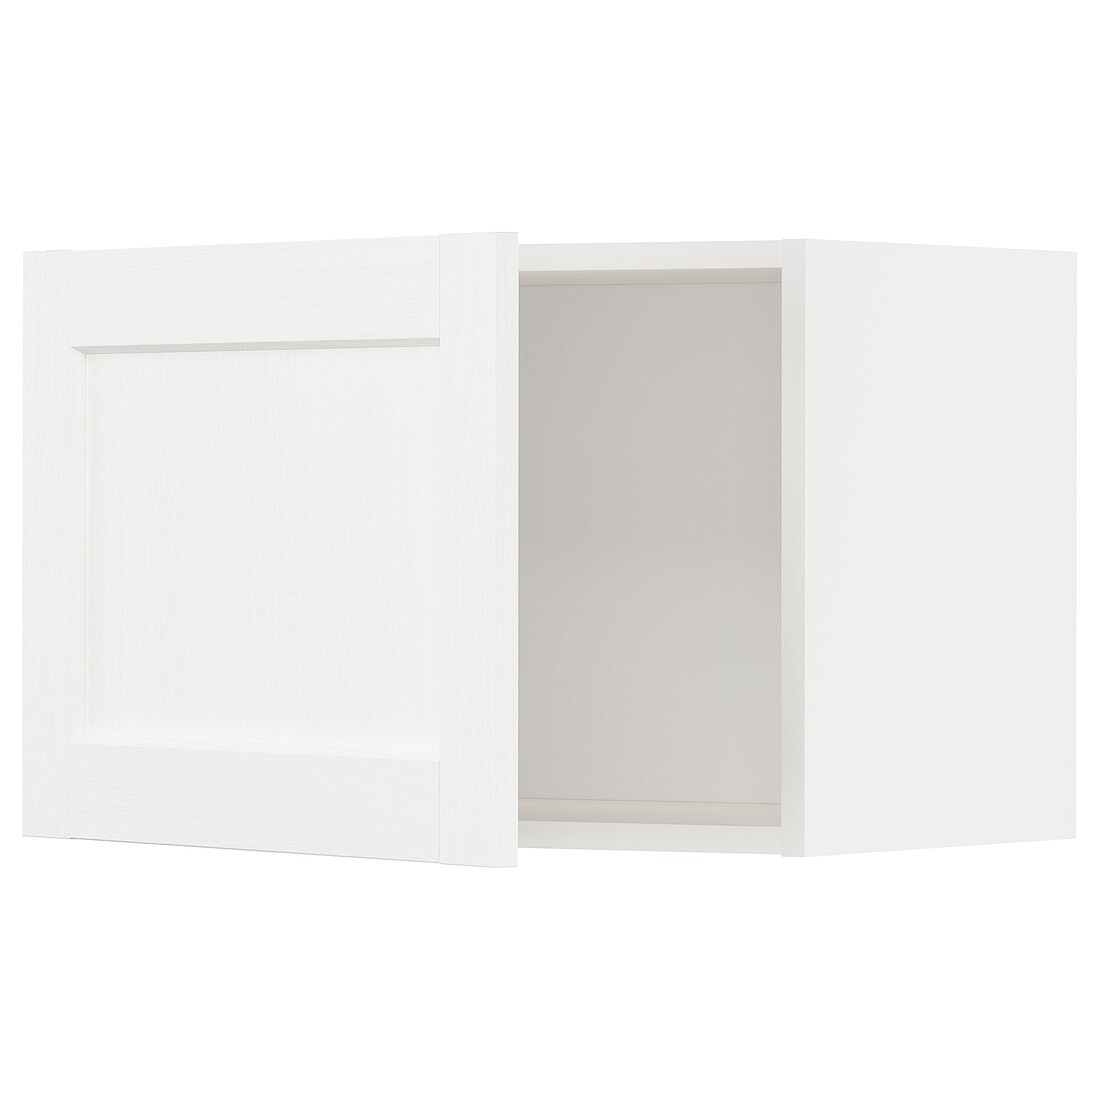 METOD МЕТОД Настенный шкаф, белый Enköping / белый имитация дерева, 60x40 см